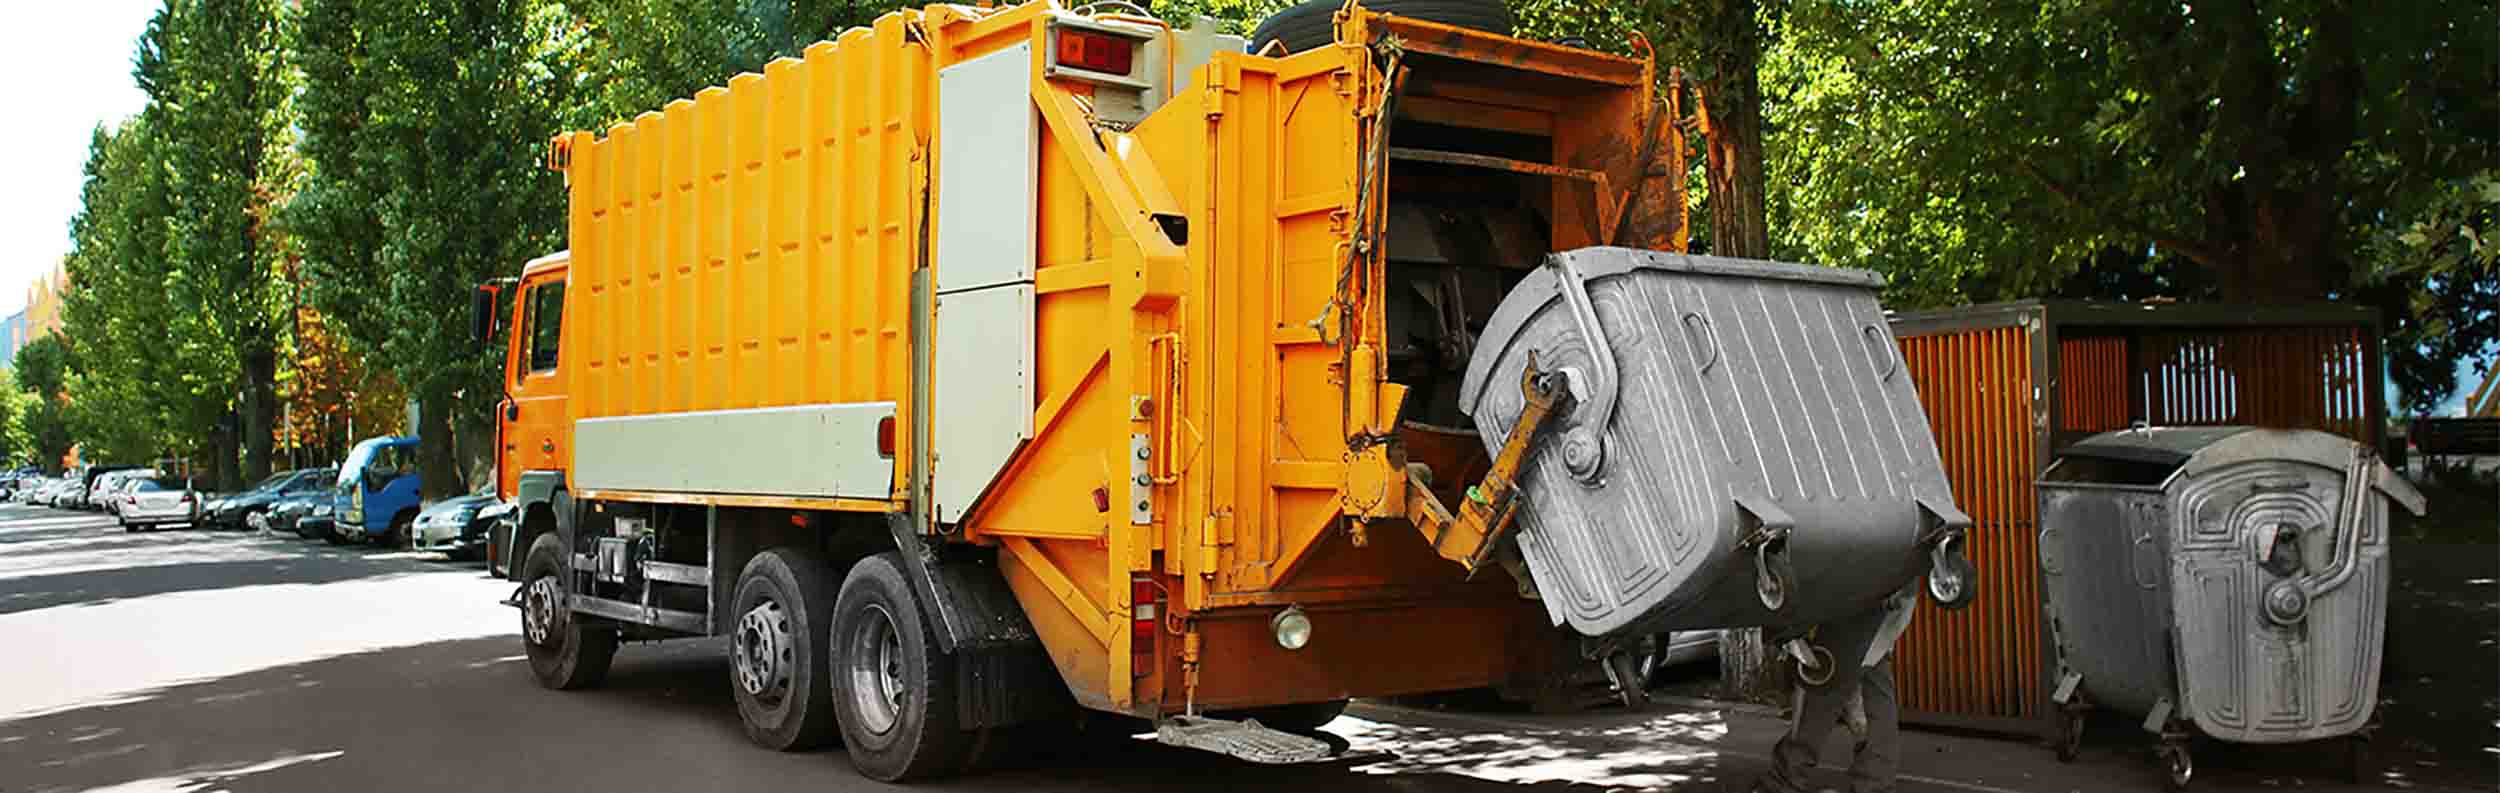 An orange garbage truck picking up a bin